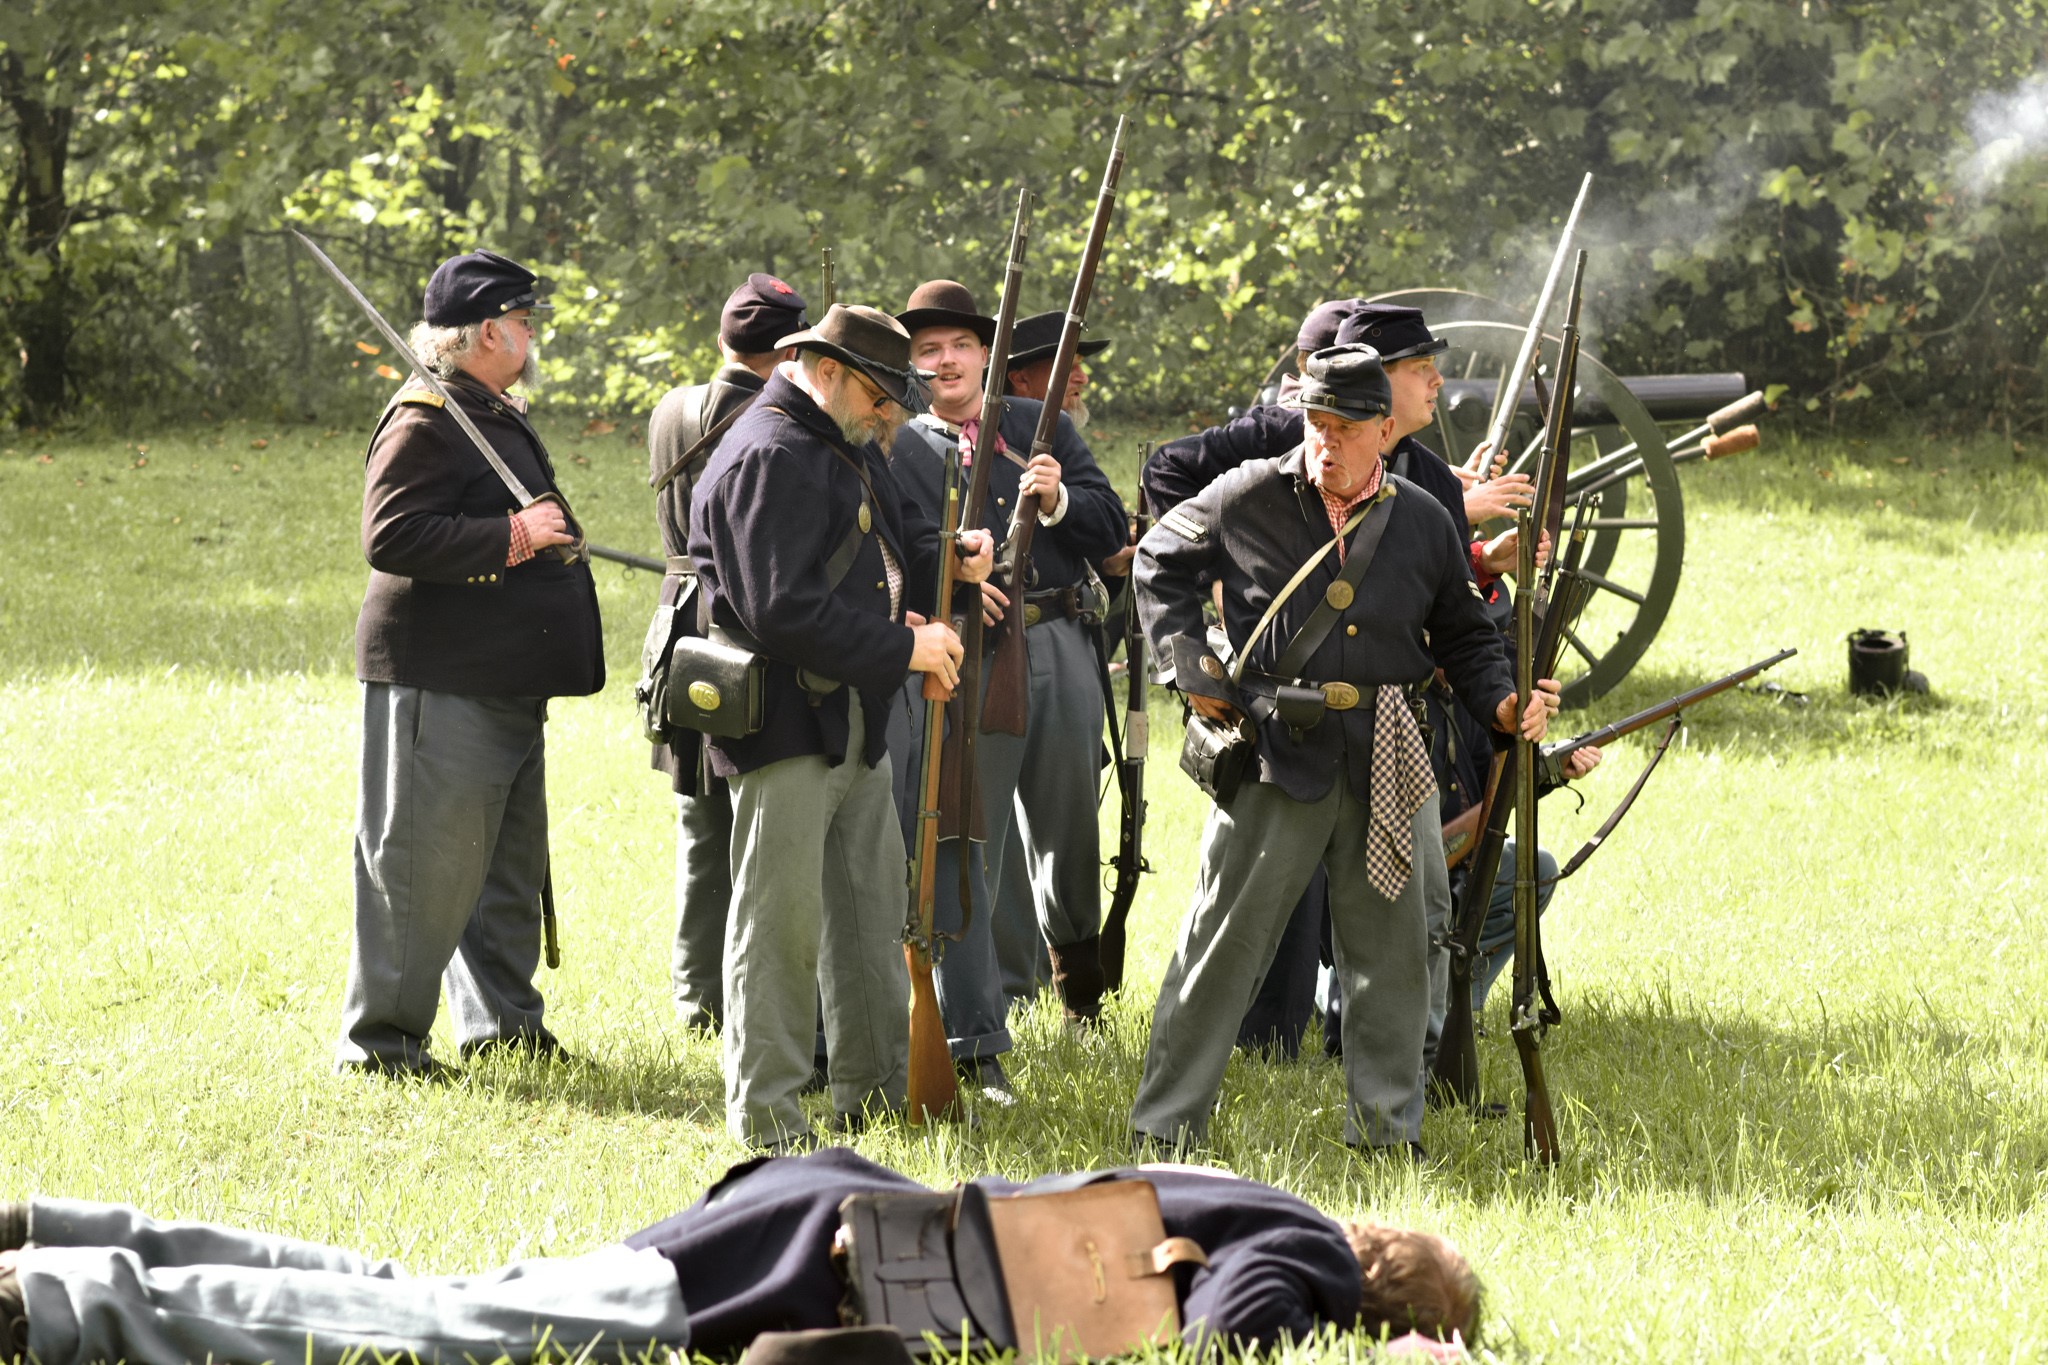 Fall Civil War Reenactments - Visit Greene County